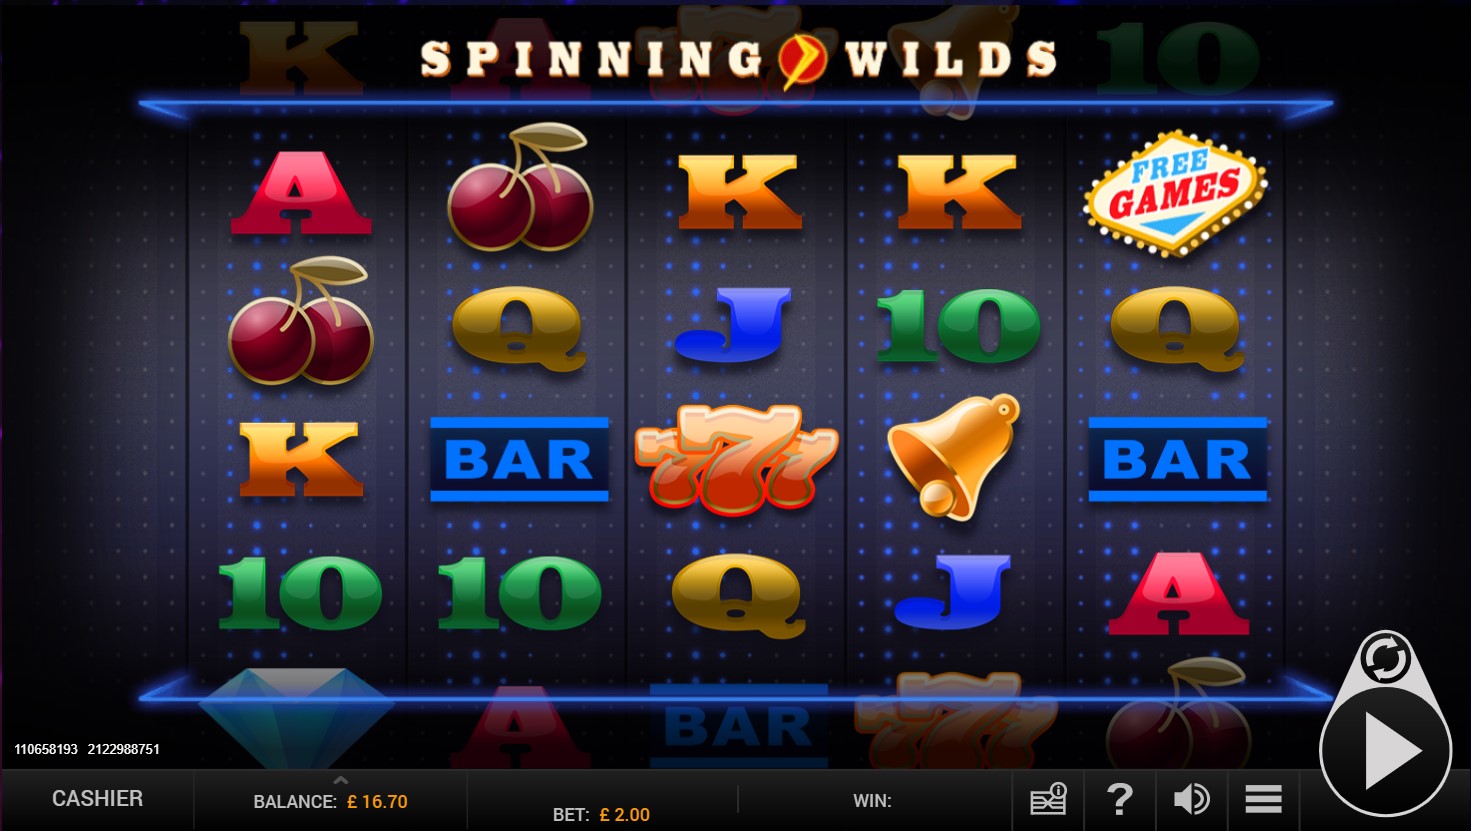 Spinning Wilds online slot at PlayOJO